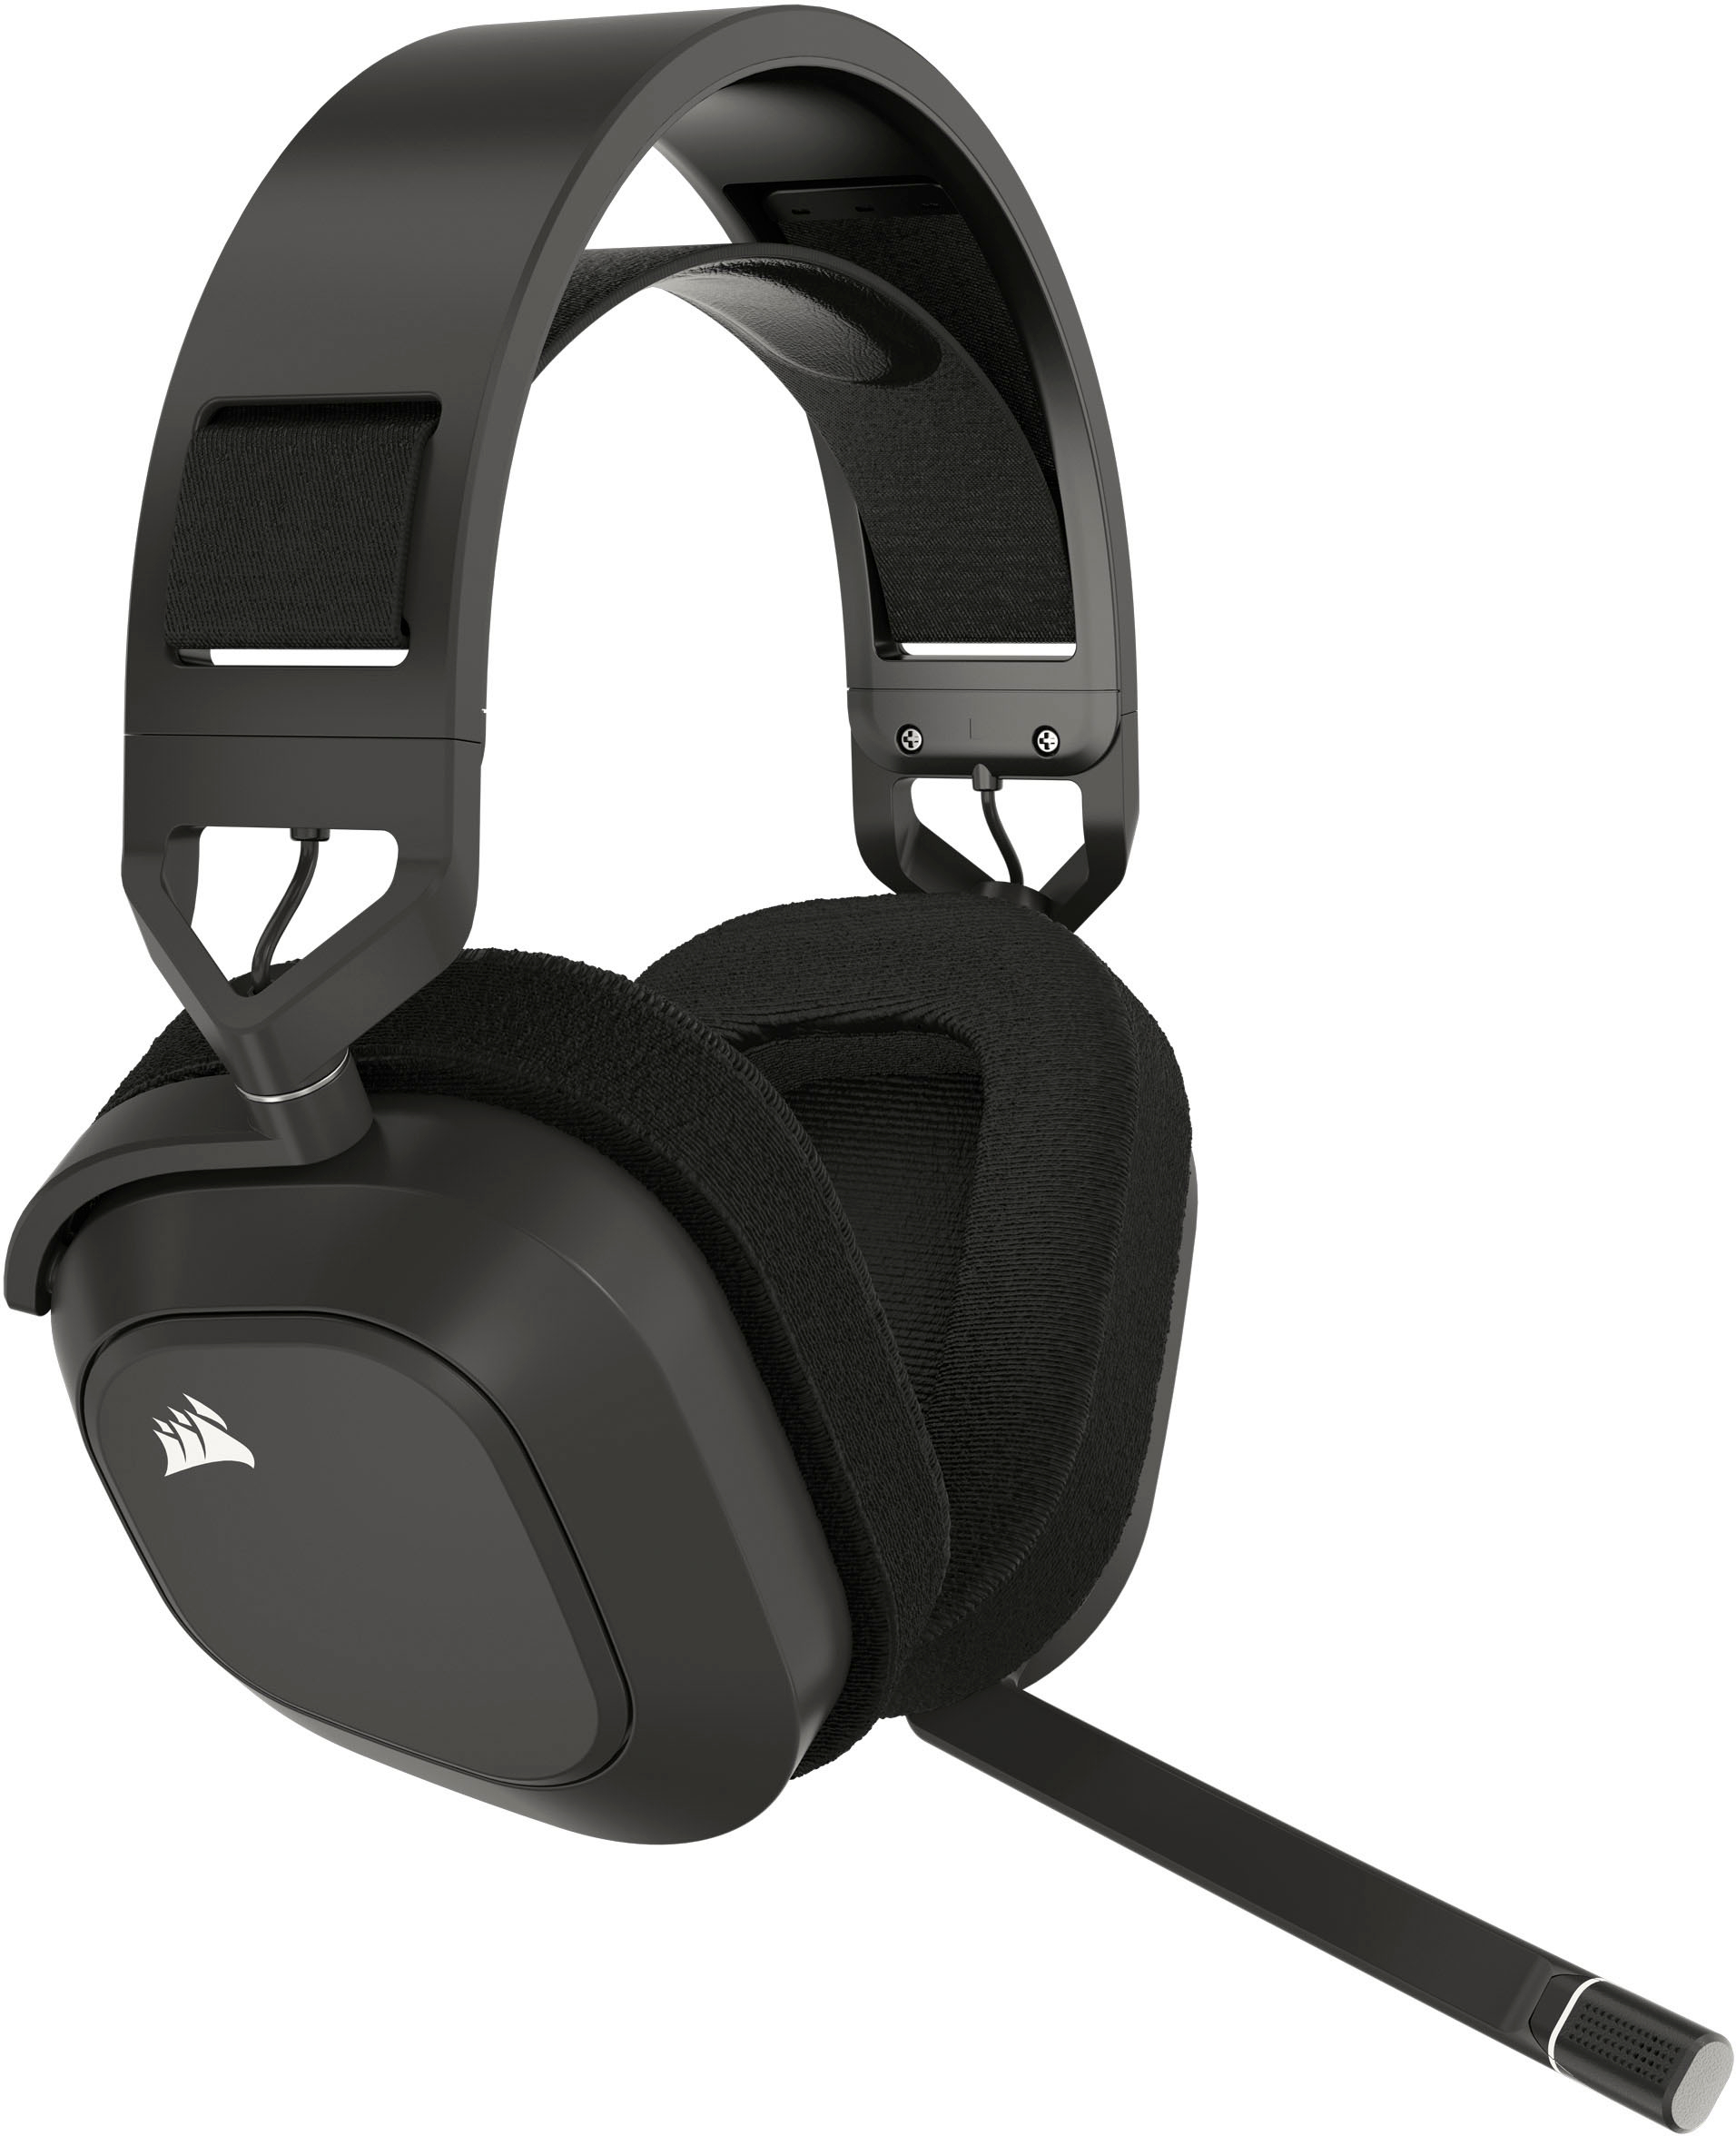 Buy CORSAIR HS80 RGB Wireless Gaming Headset - Carbon Black